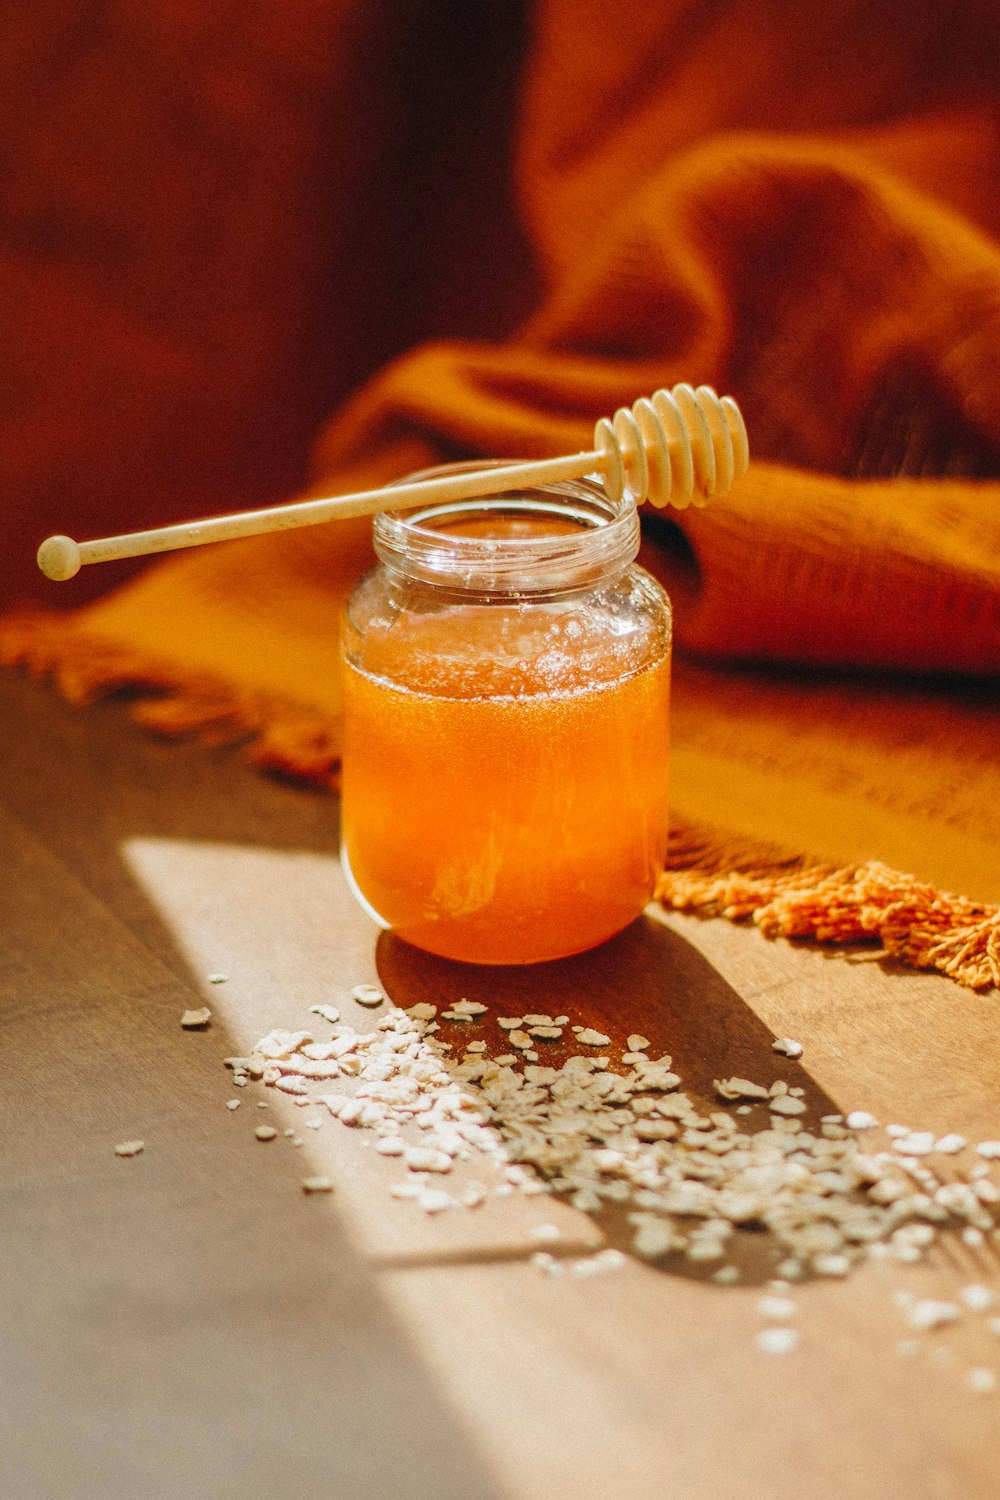 clear glass jar with orange liquid